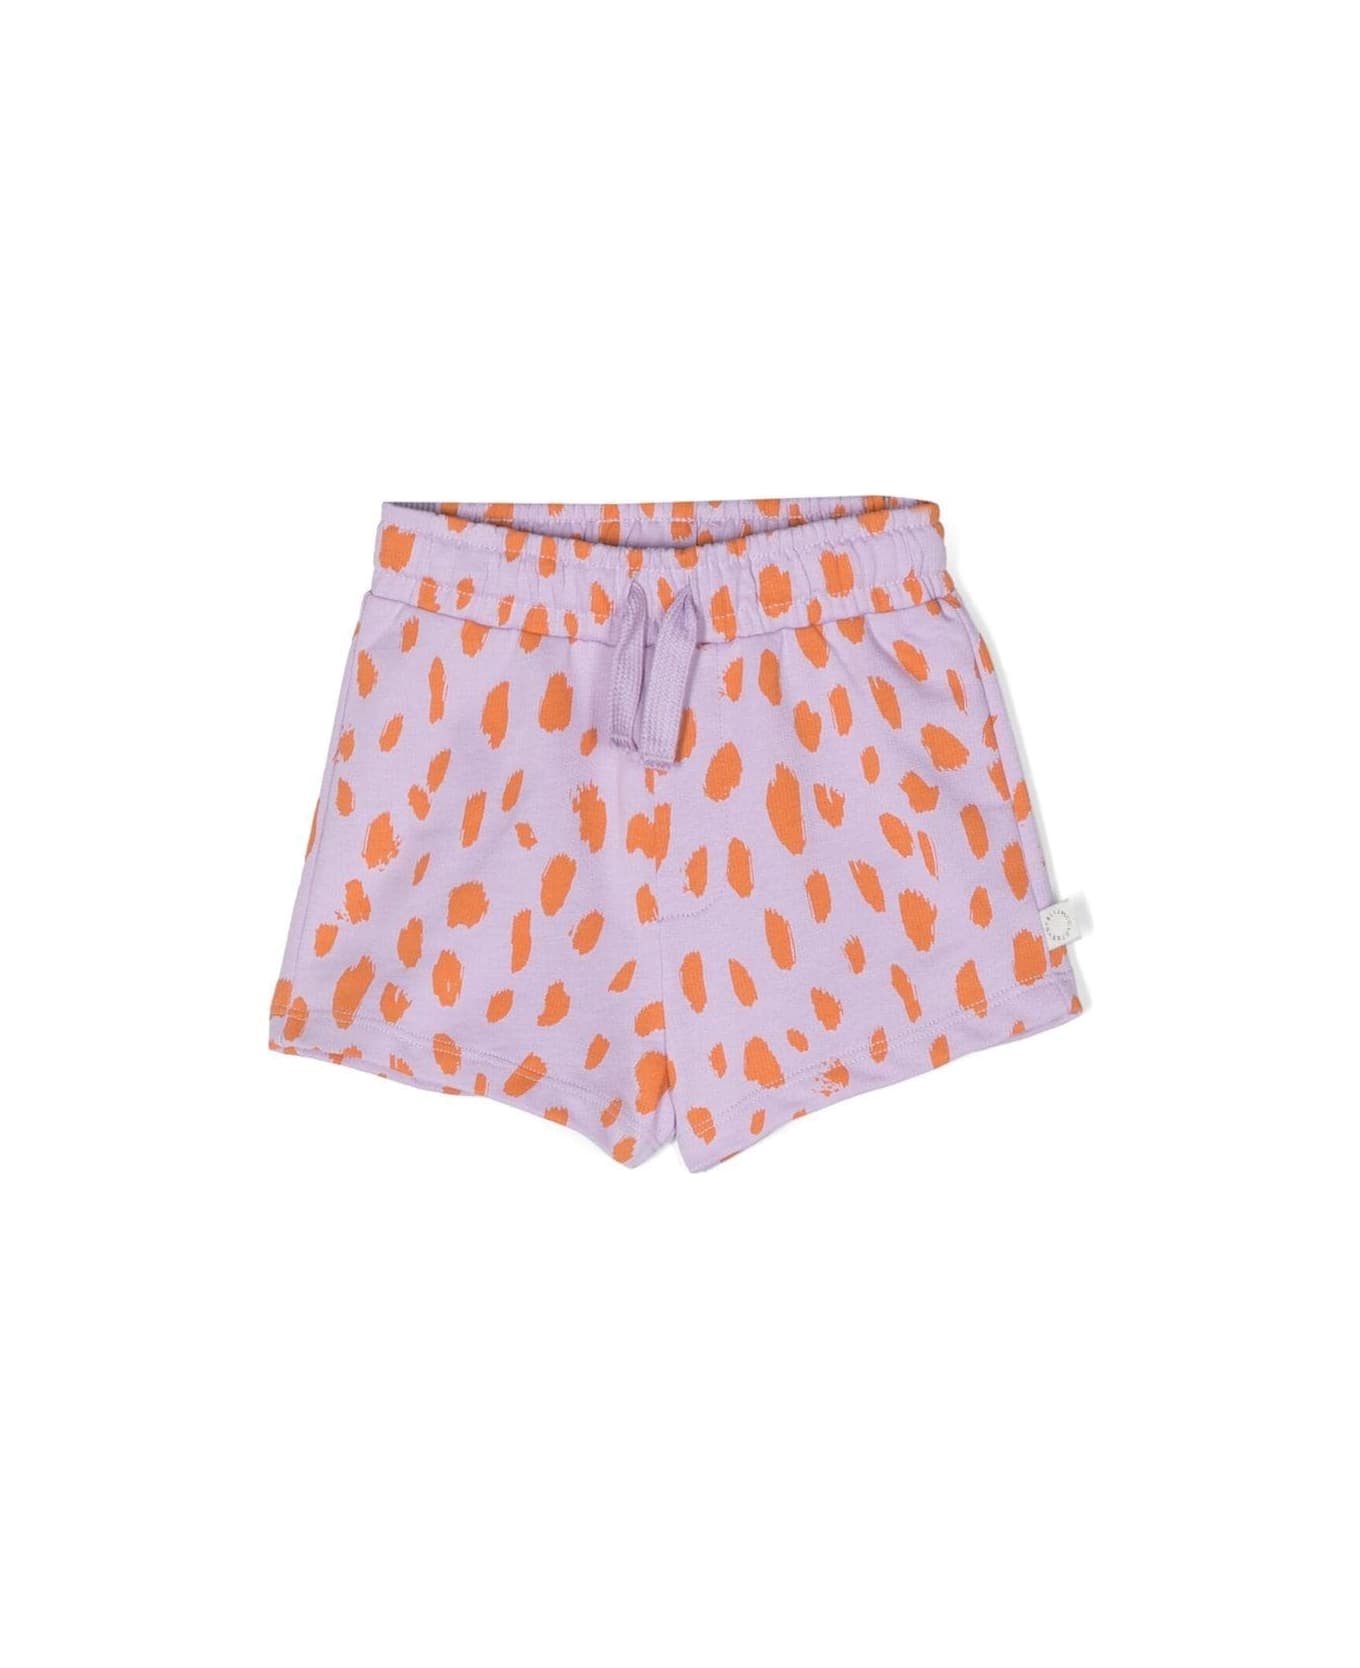 Stella McCartney Violet And Orange Cotton Stretch Shorts - GLICINE/ARGENTO